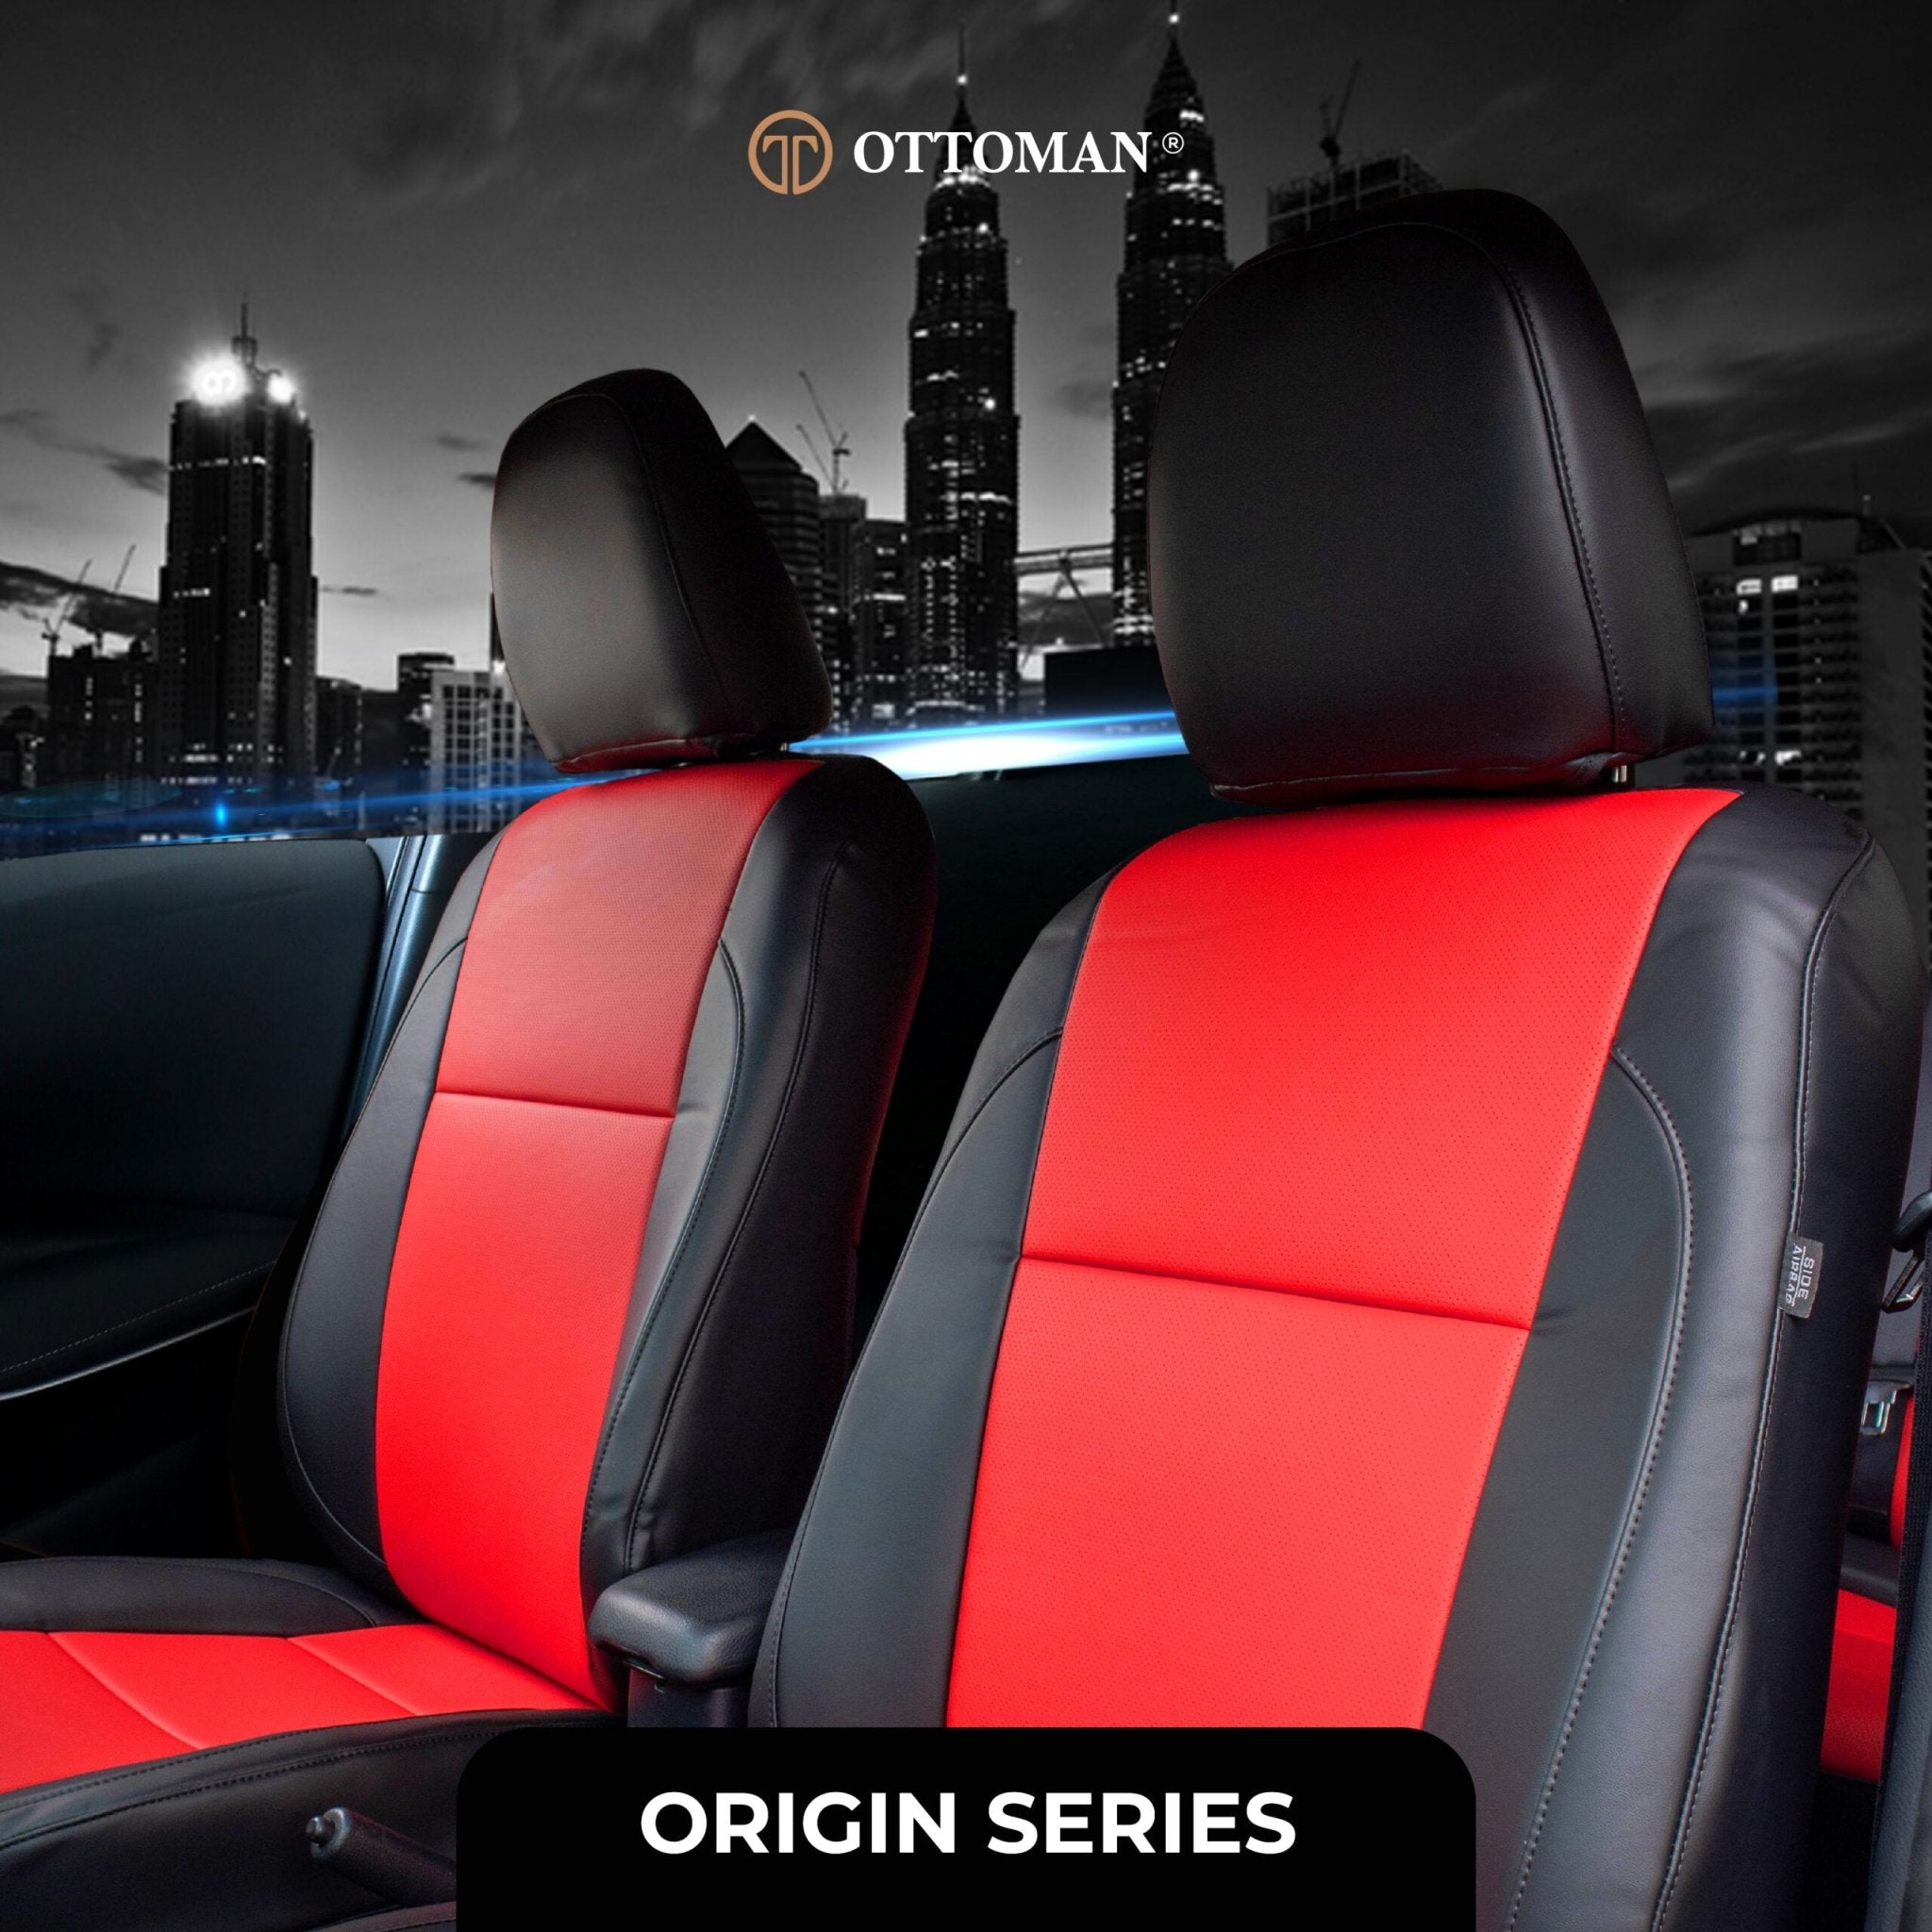 Proton Preve (2012-Present) Ottoman Seat Cover Seat Cover in Klang Selangor, Penang, Johor Bahru - Ottoman Car Mats